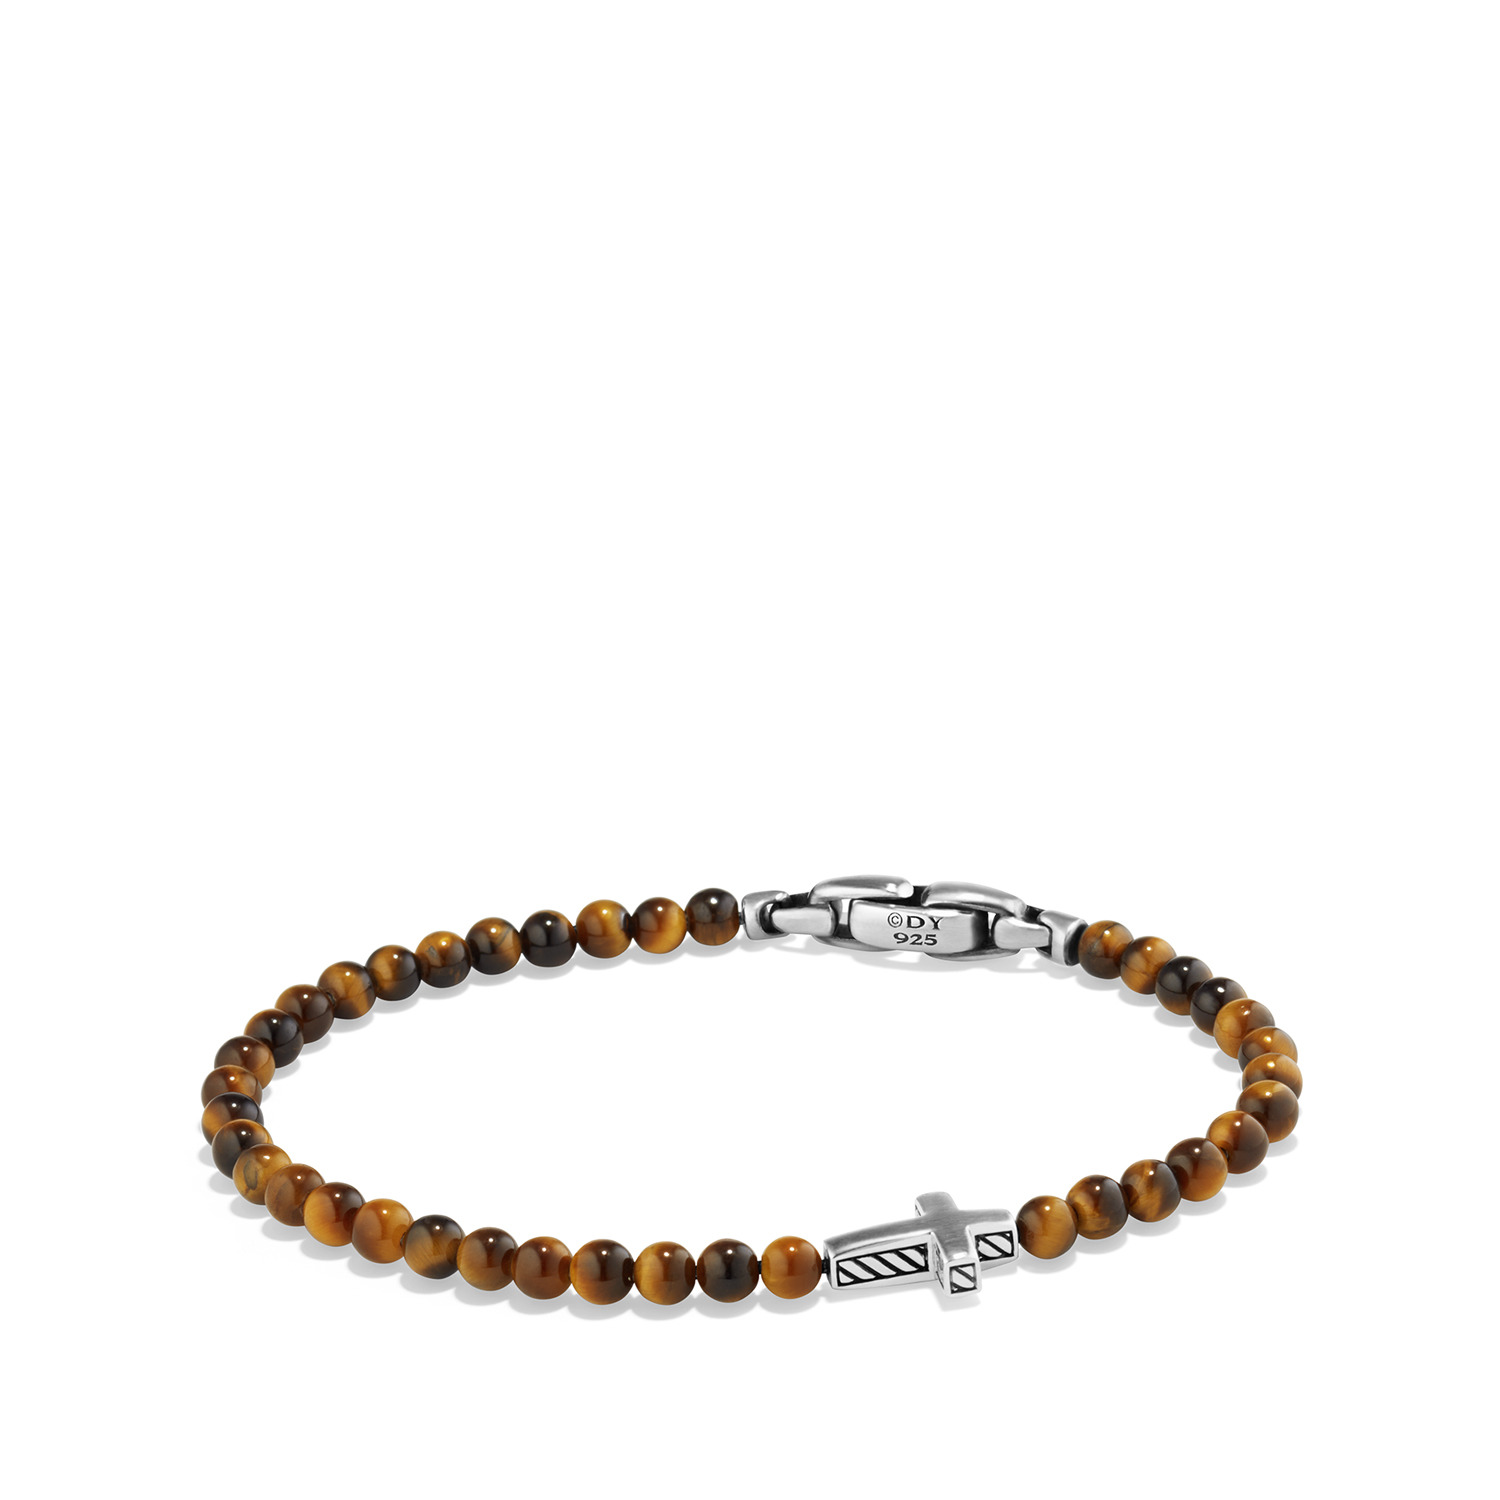 David Yurman Spiritual Beads Cross Station Bracelet with Tigers Eye, size Medium 0